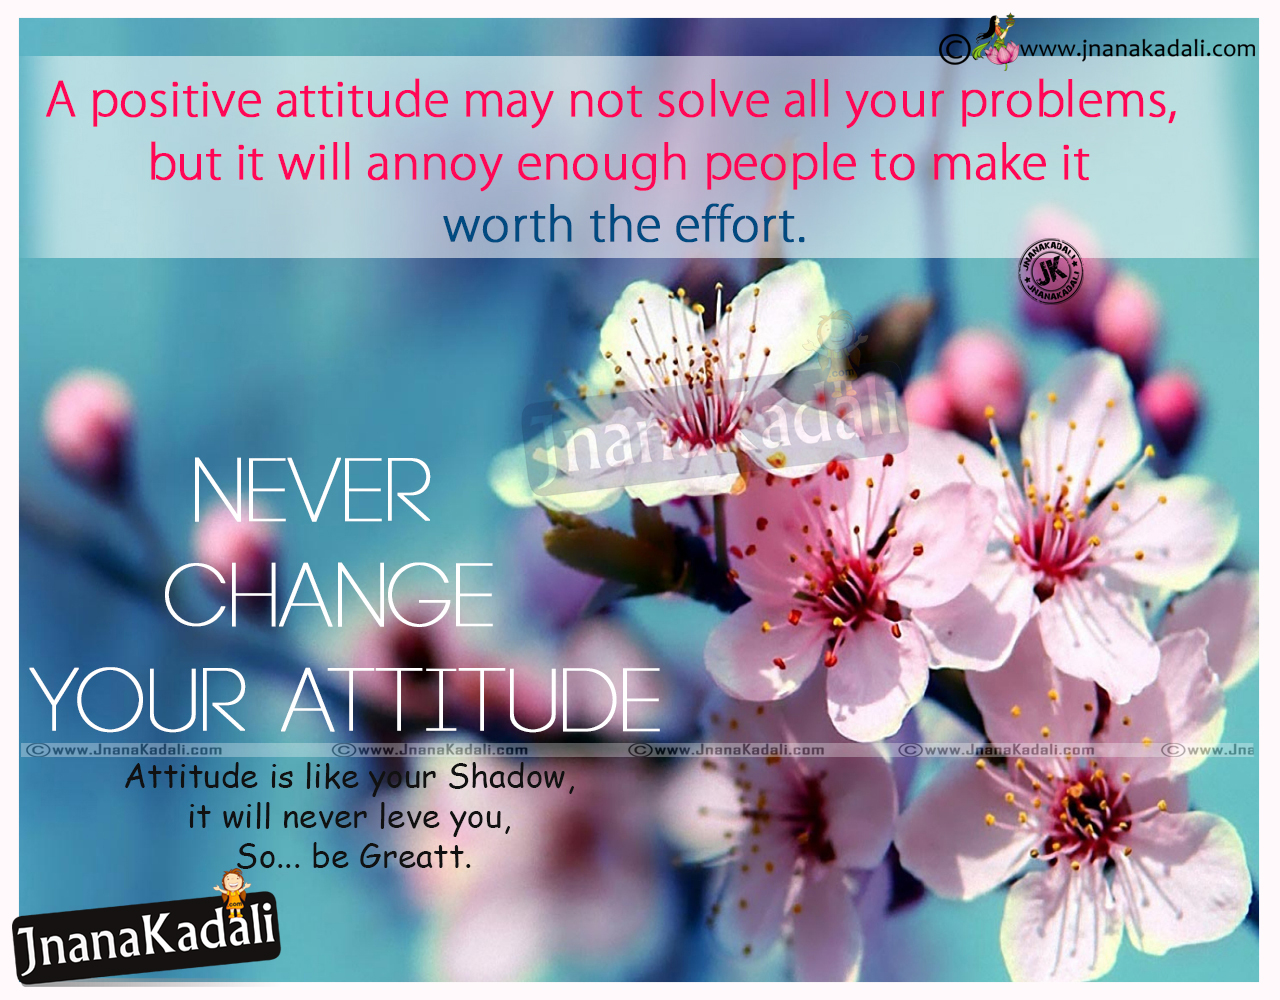 English Attitude Quotes and Messages Online | JNANA KADALI.COM |Telugu